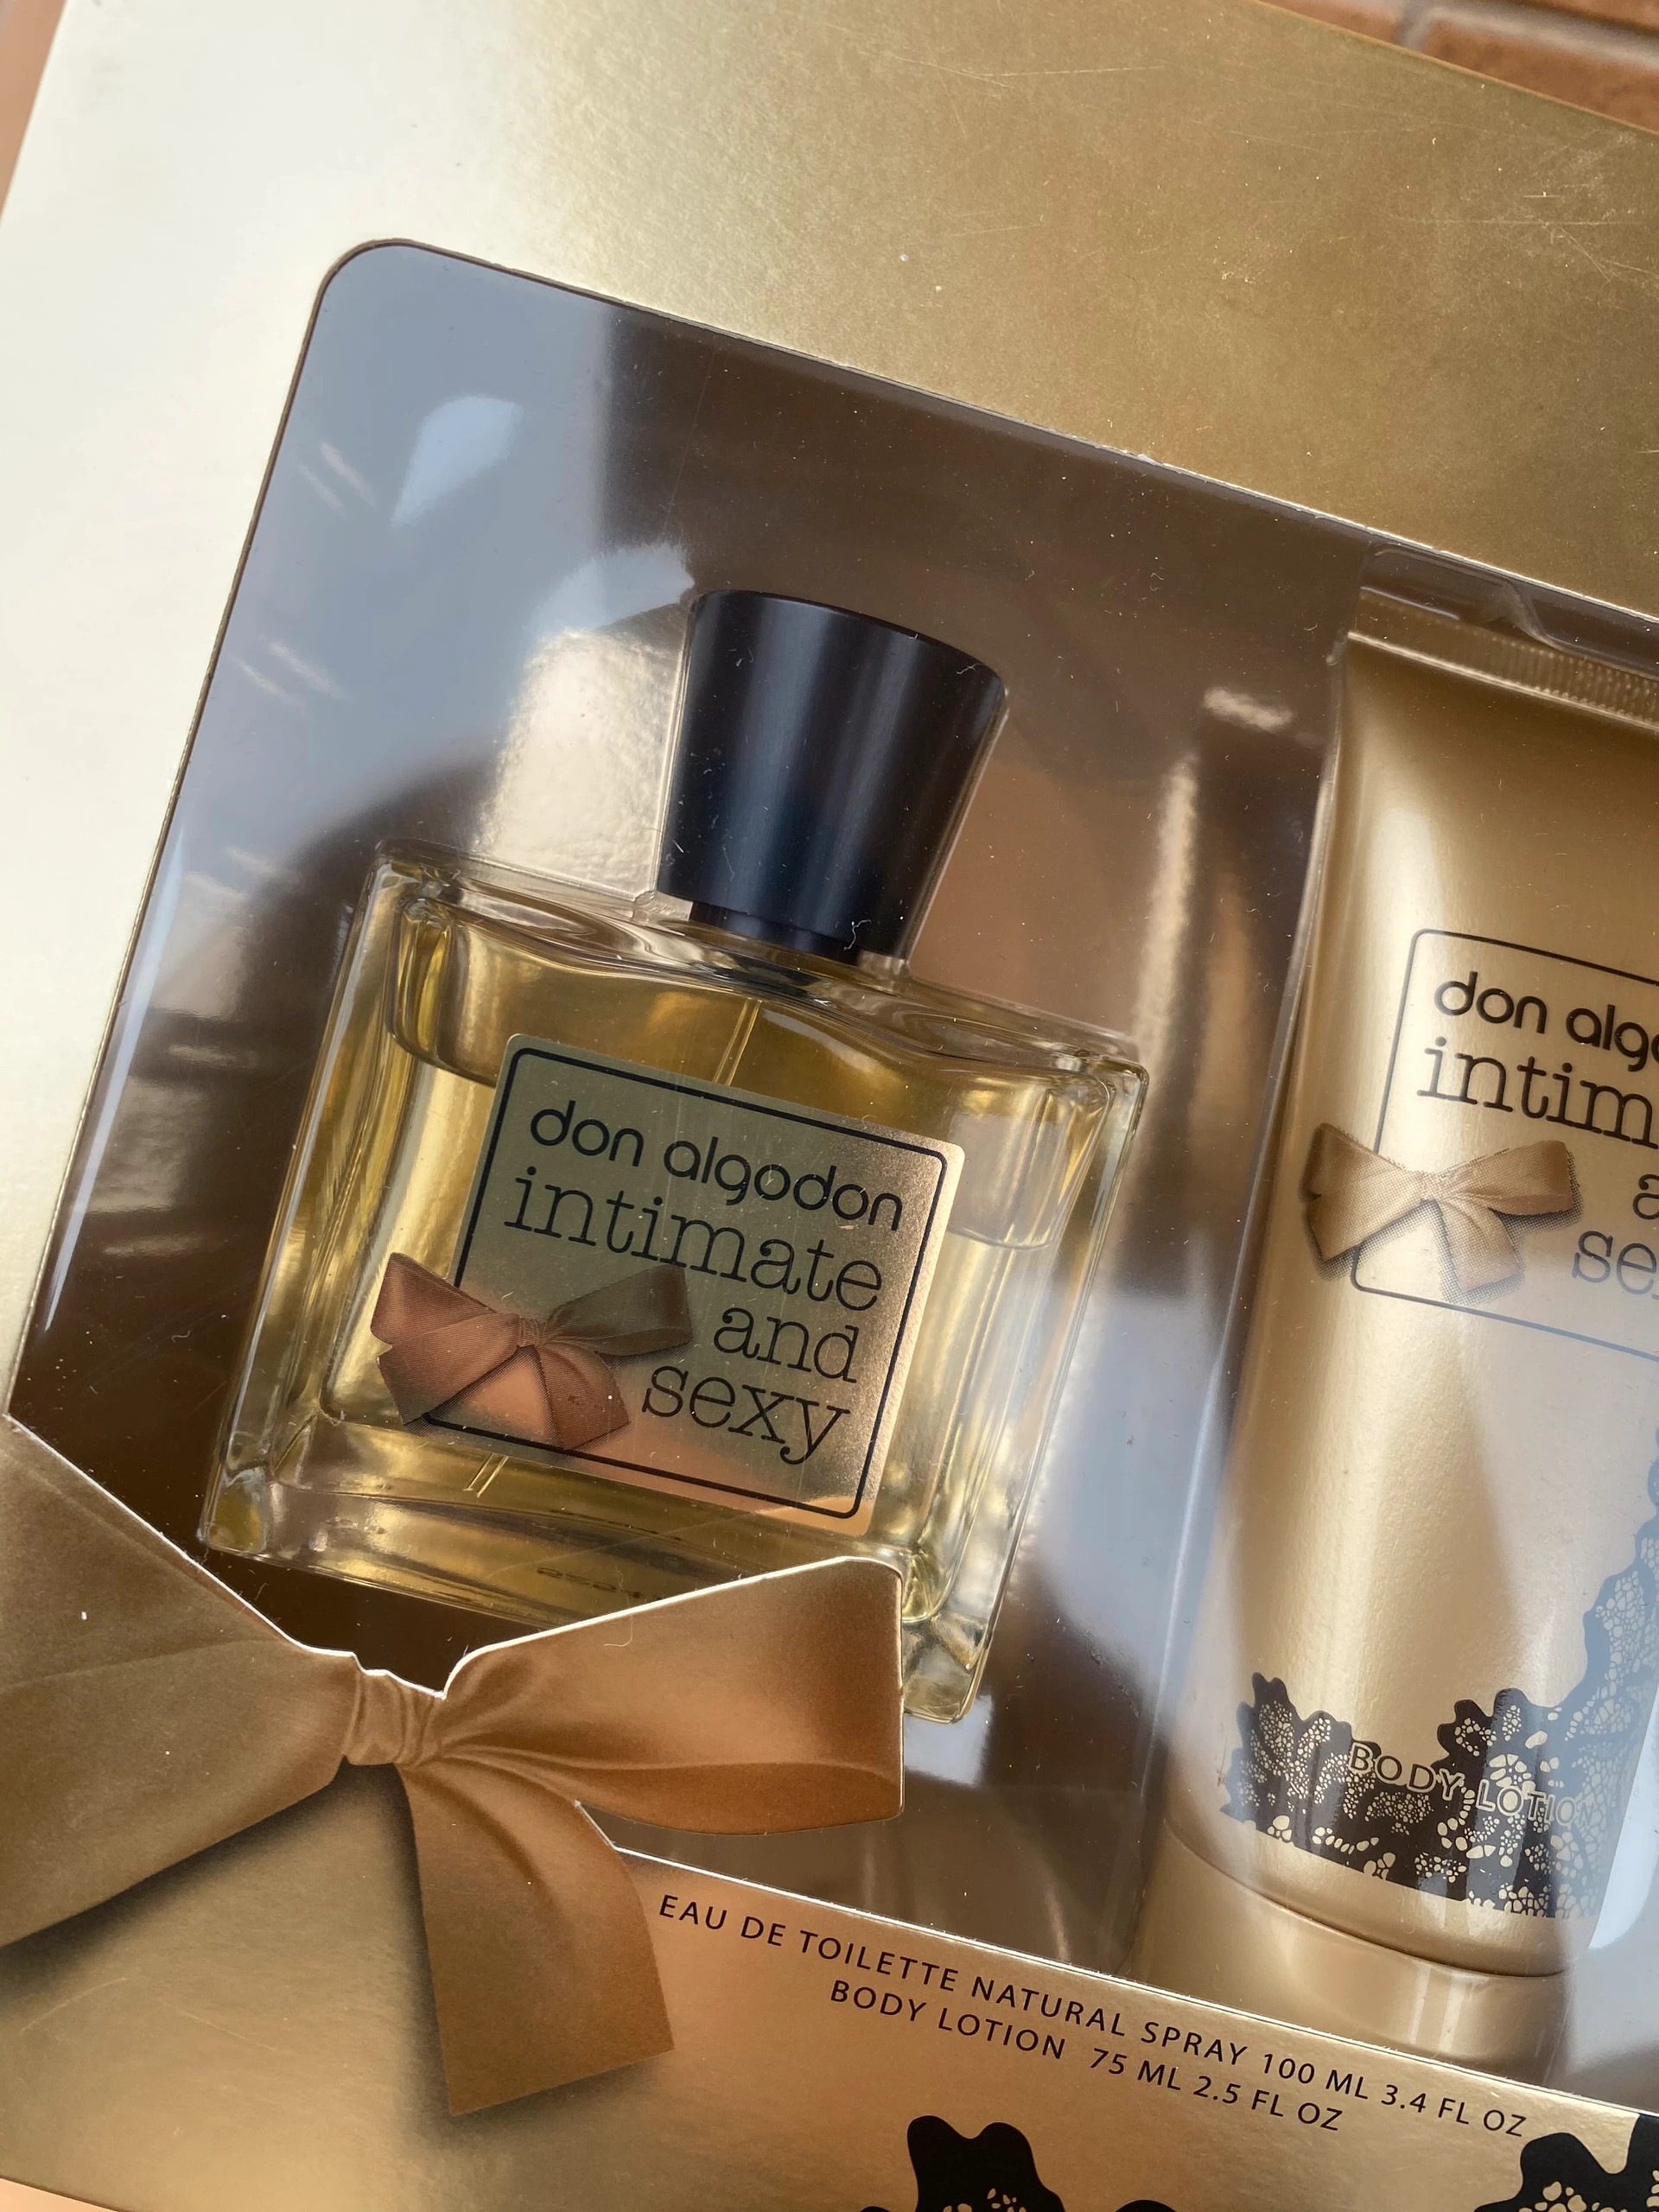 INTIMATE & SEXY perfume by Don Algodón – Wikiparfum